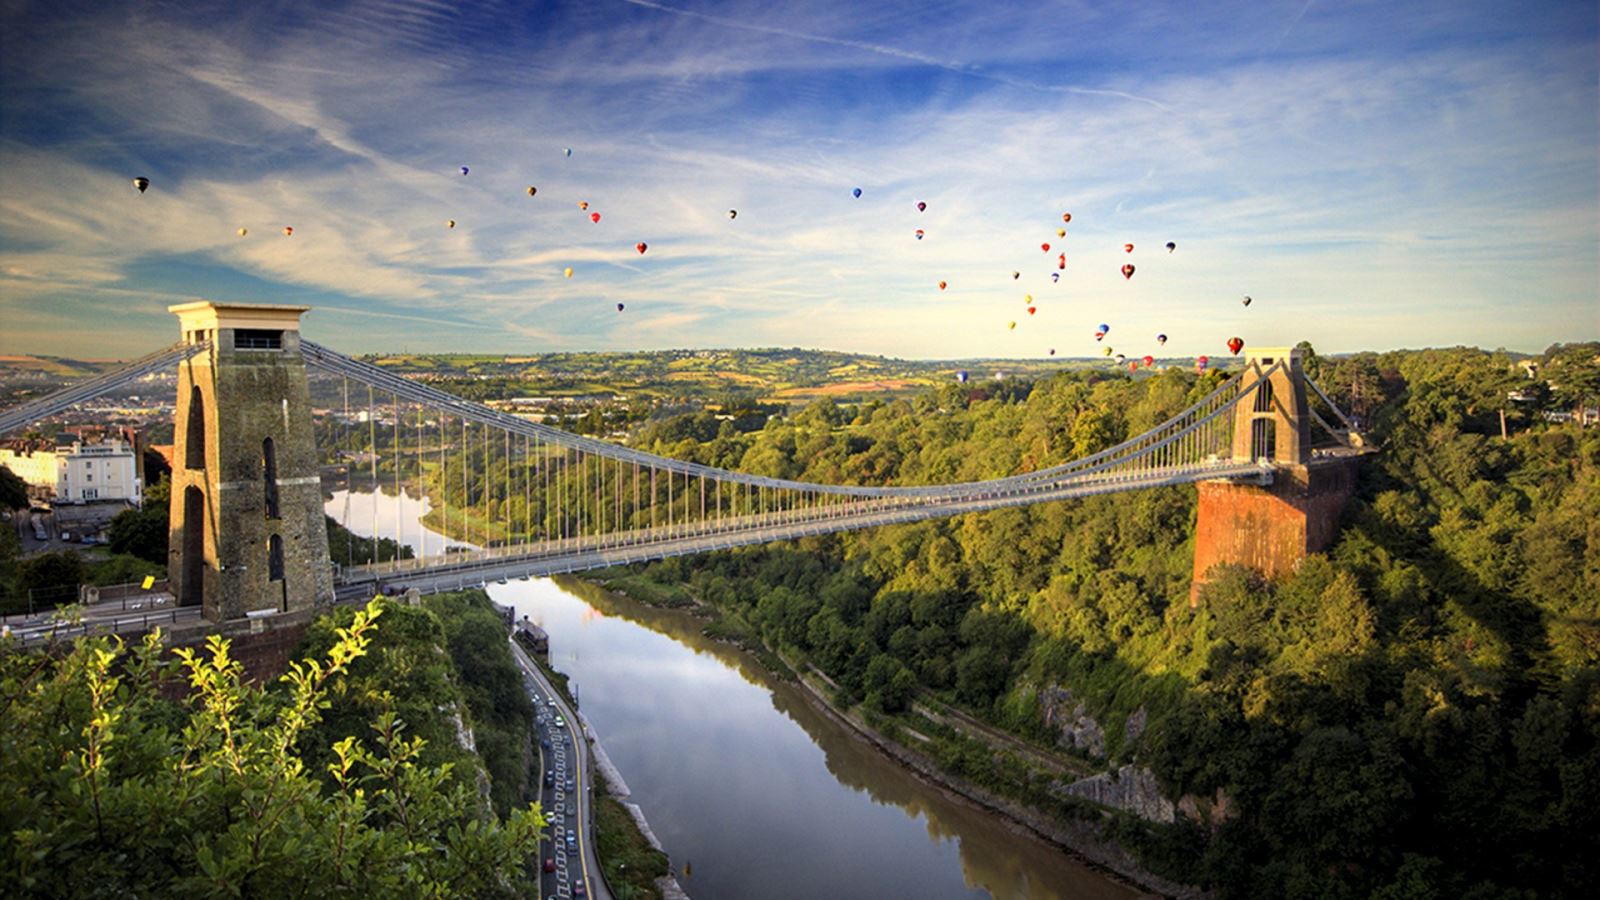 Hot air balloons flying over Clifton Suspension Bridge